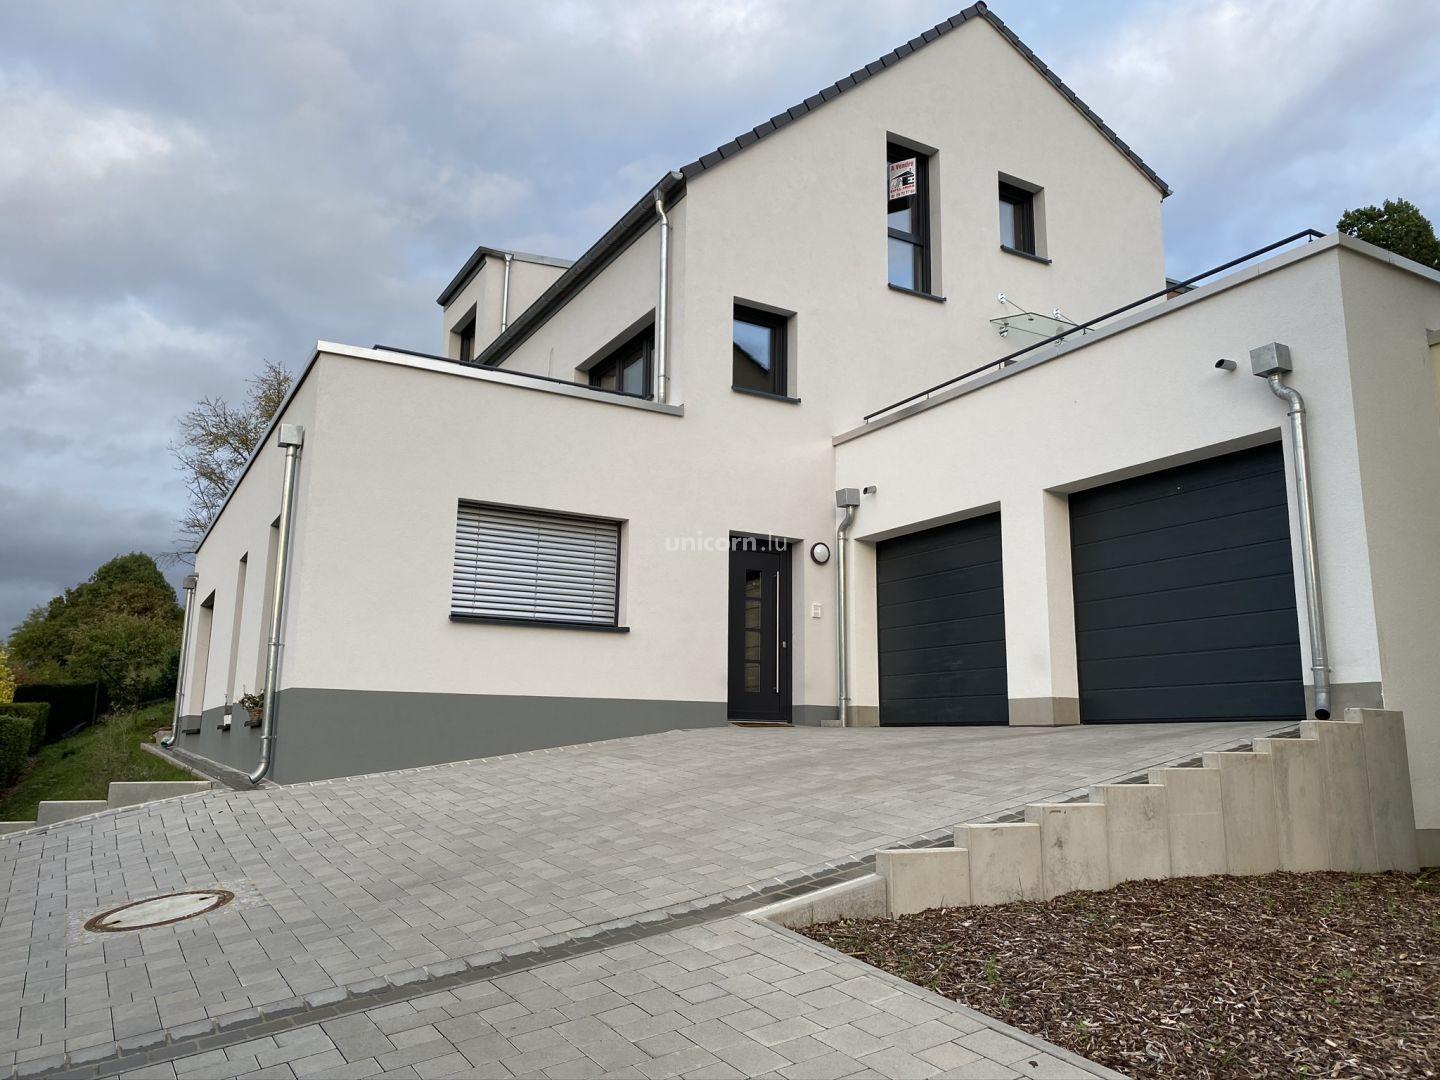 单元房 for sale in Echternach  - 153m²